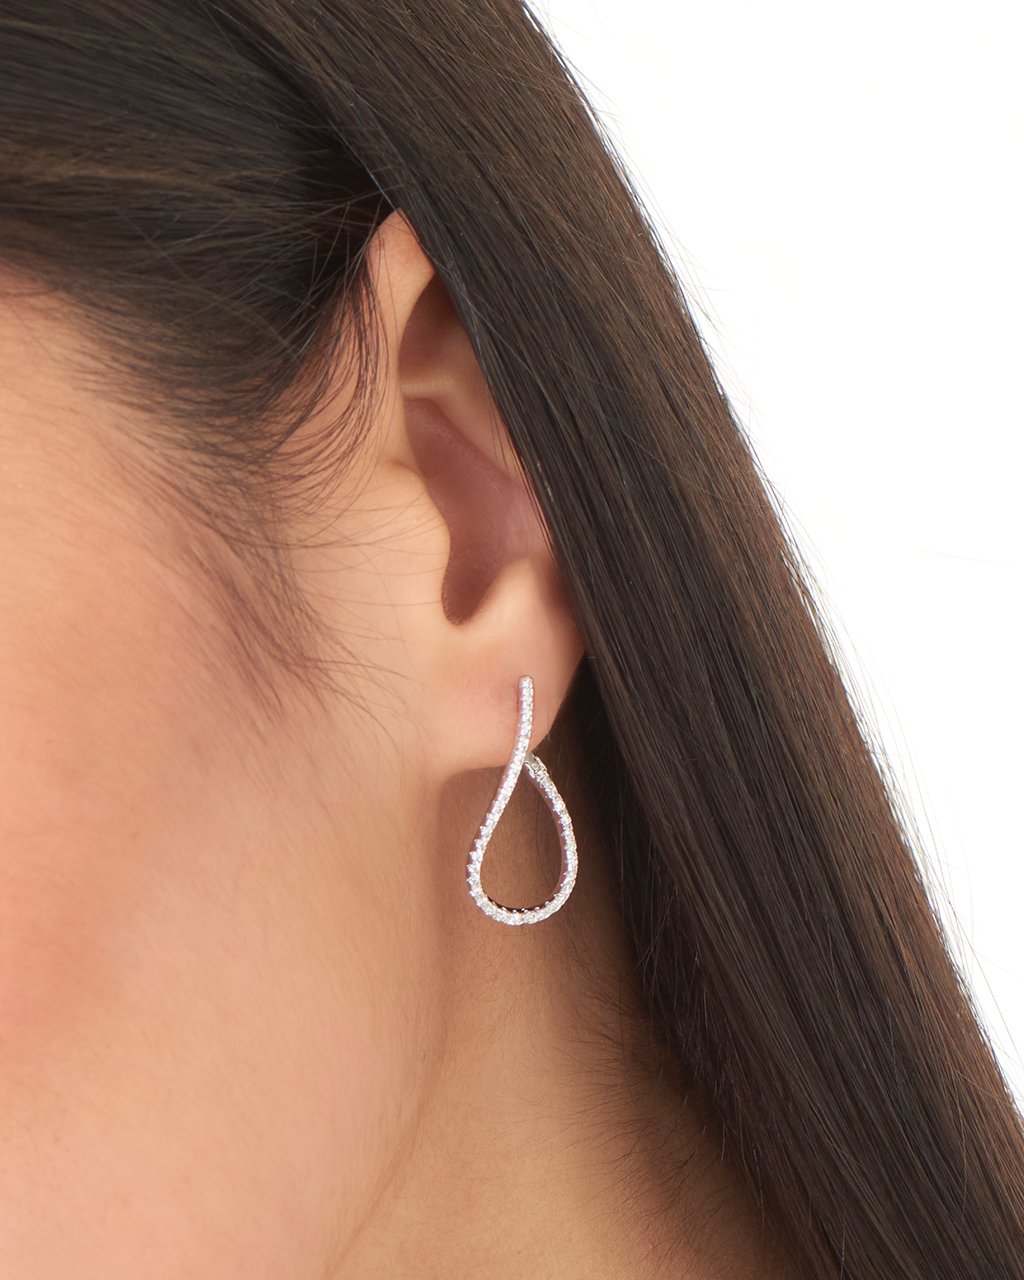 CZ Studded Drop Earrings Earring Sterling Forever 